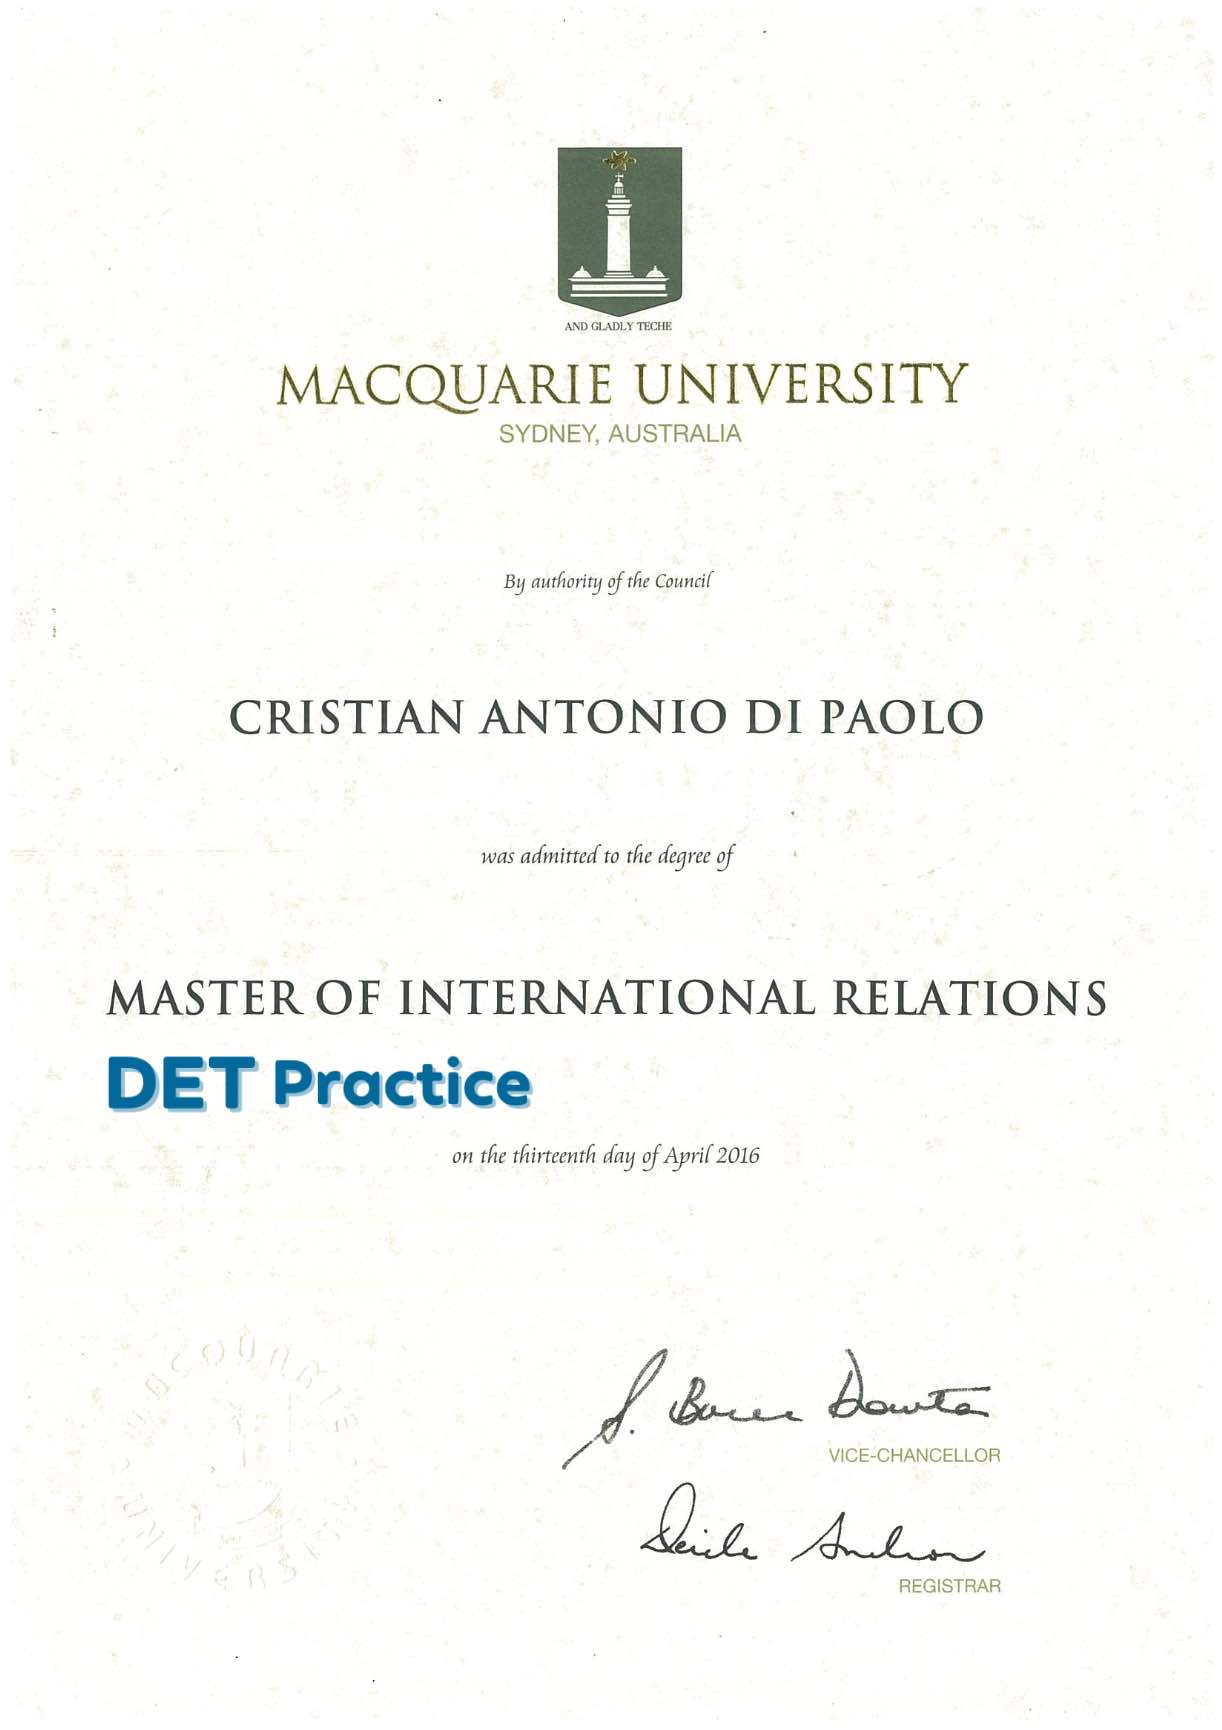 Master Degree, duolingo English test, DET Ready, DET Practice Platform, DET preparation